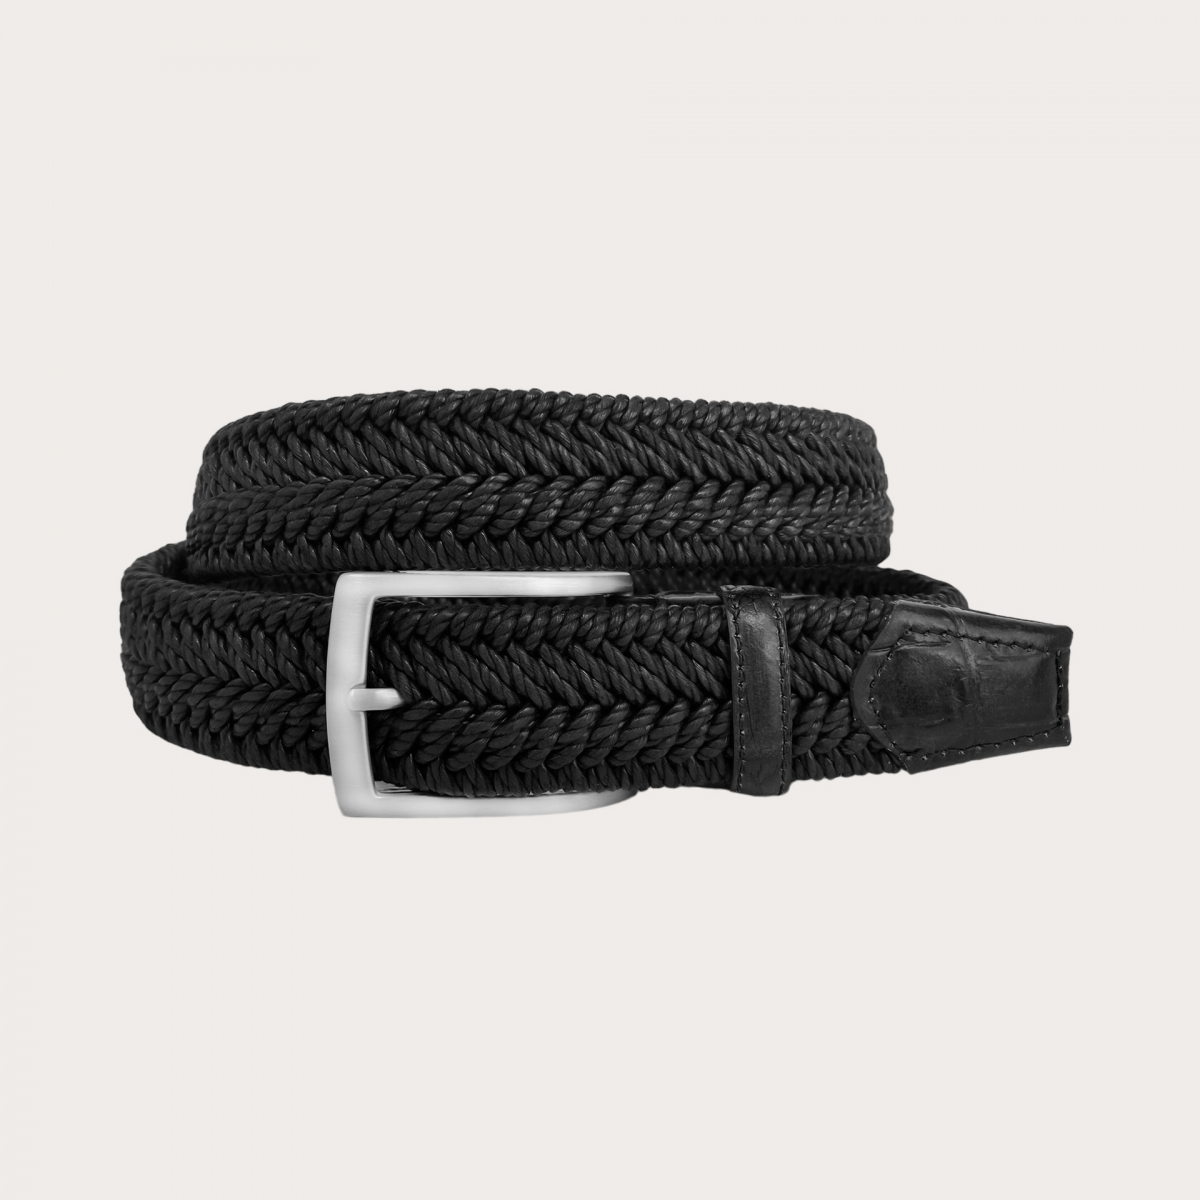 https://www.brucleshop.com/21147-verybig_default/black-elastic-braided-belt-adorned-with-genuine-crocodile-stamped-bovine-leather-parts.jpg